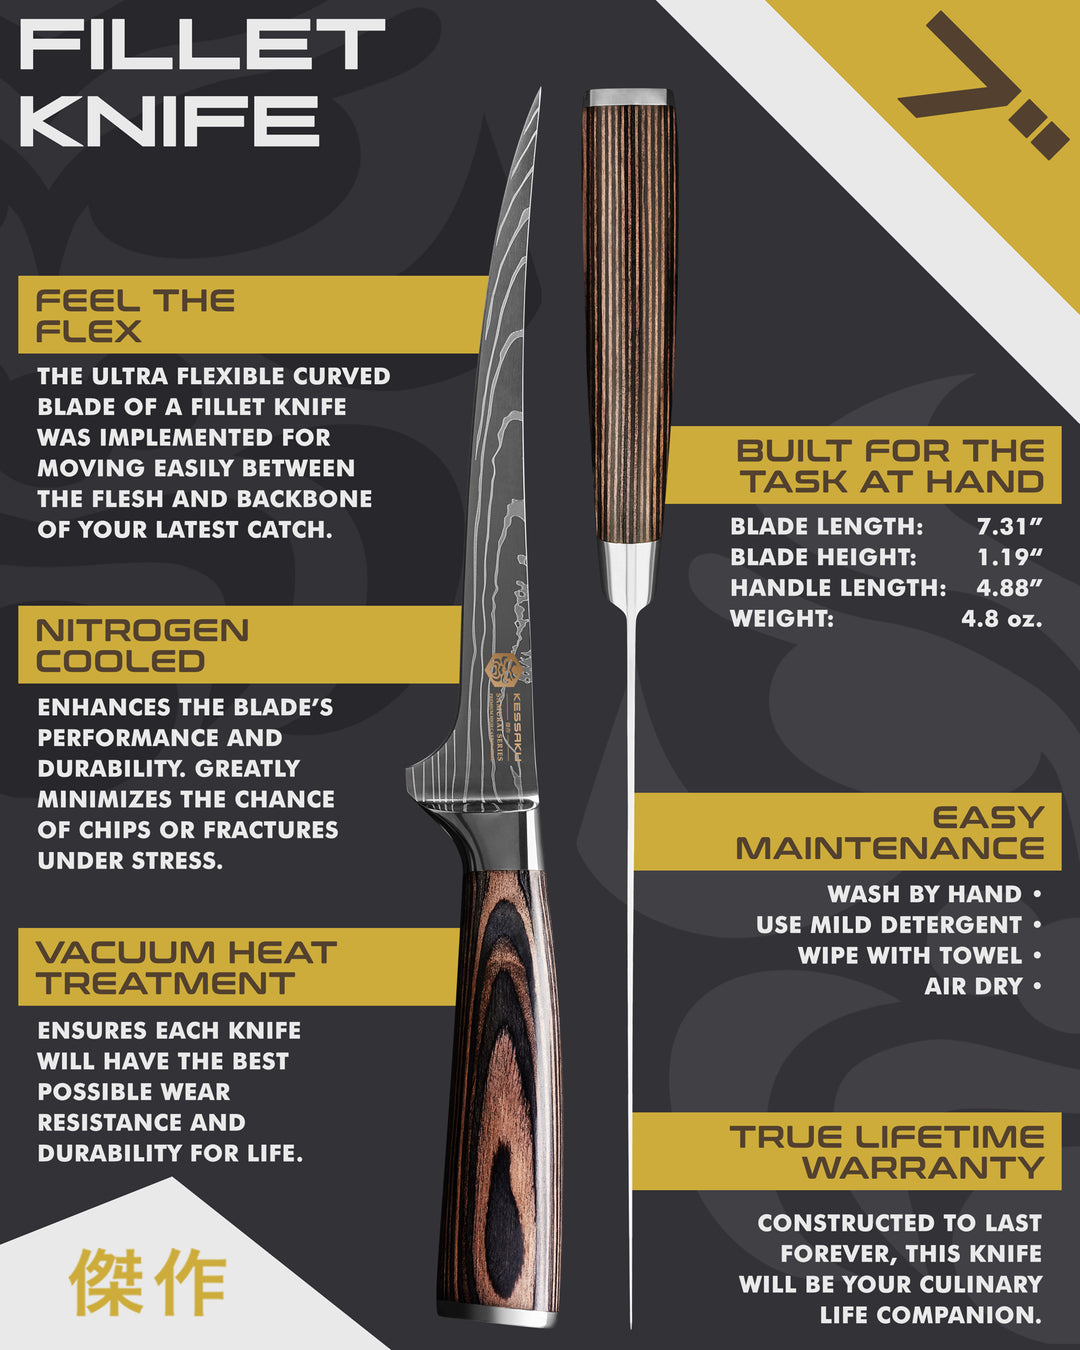 Kessaku Samurai Series Fillet Knife uses, dimensions, maintenance, warranty info, and additional blade treatments